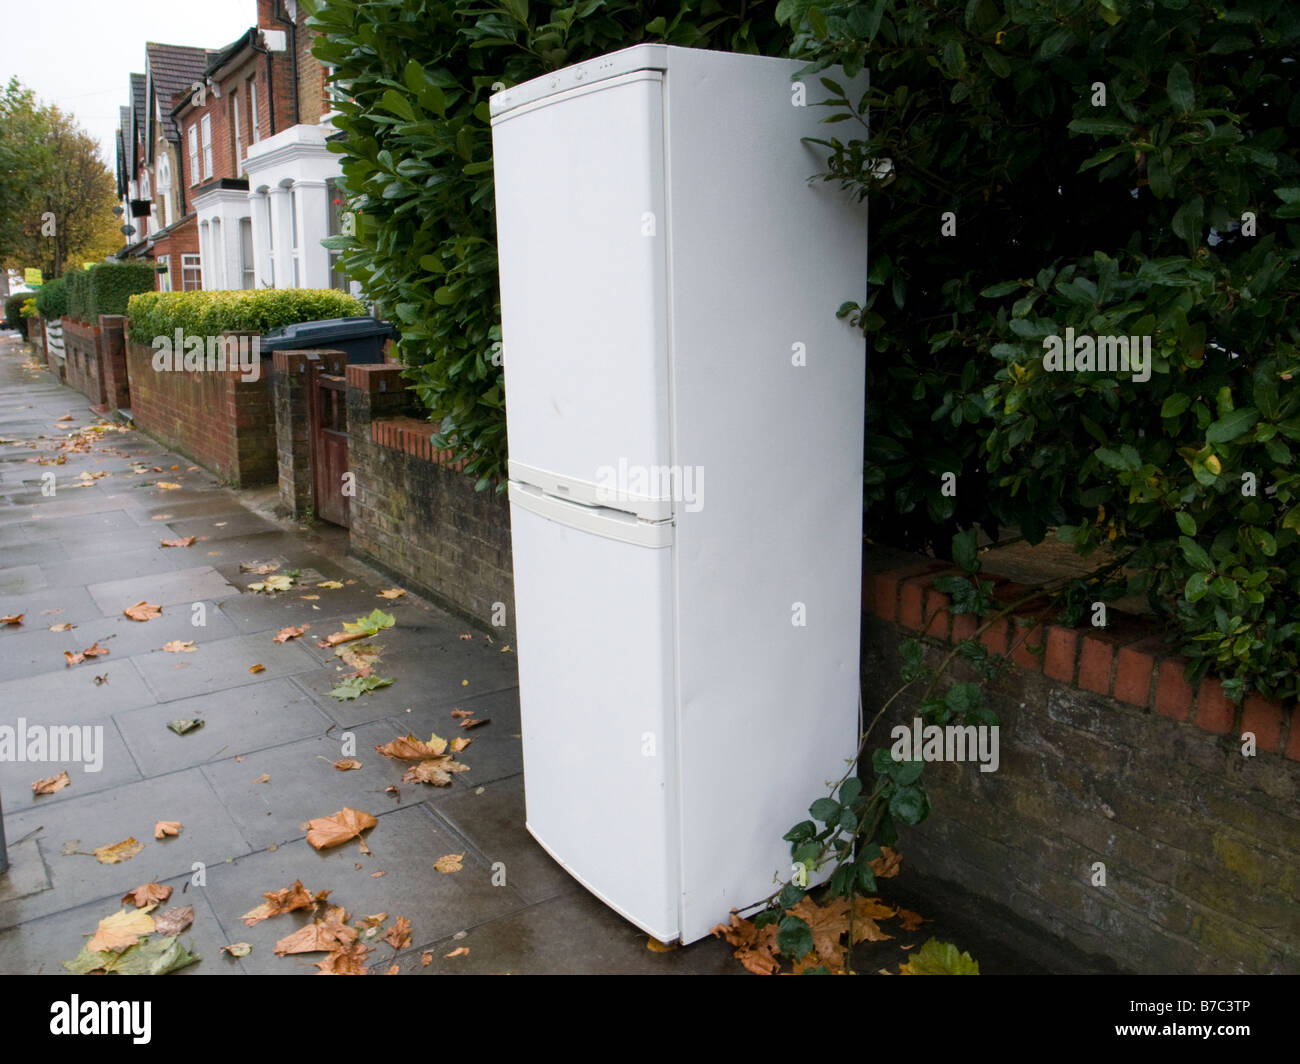 https://c8.alamy.com/comp/B7C3TP/discarded-fridge-freezer-on-pavement-outside-house-london-england-B7C3TP.jpg